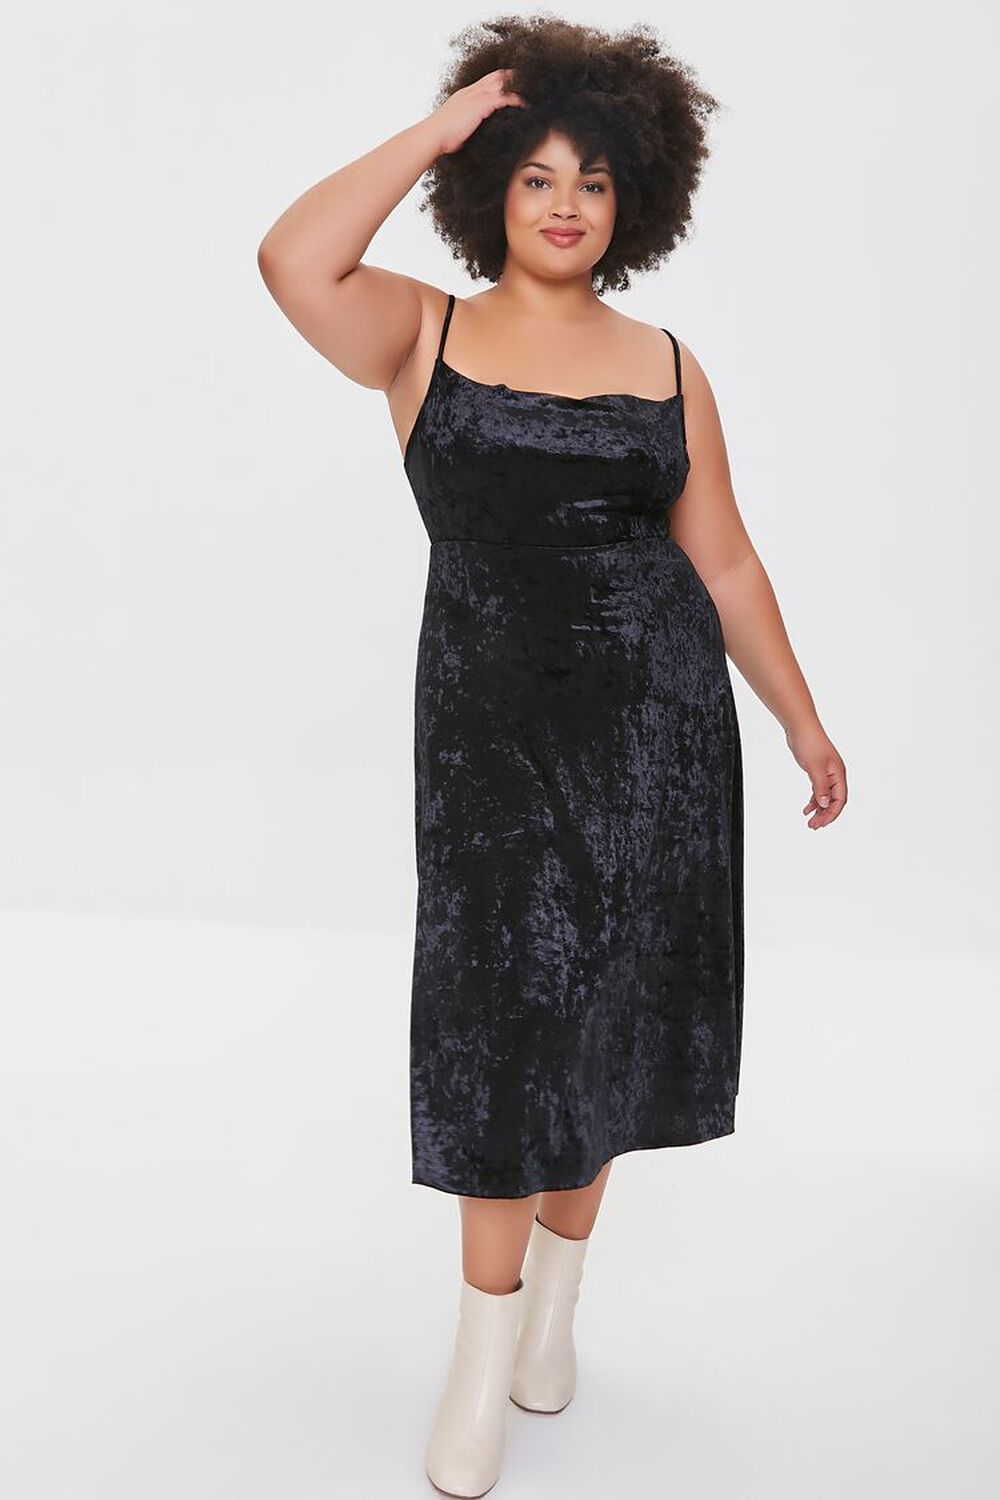 BLACK Plus Size Crushed Velvet Dress, image 1